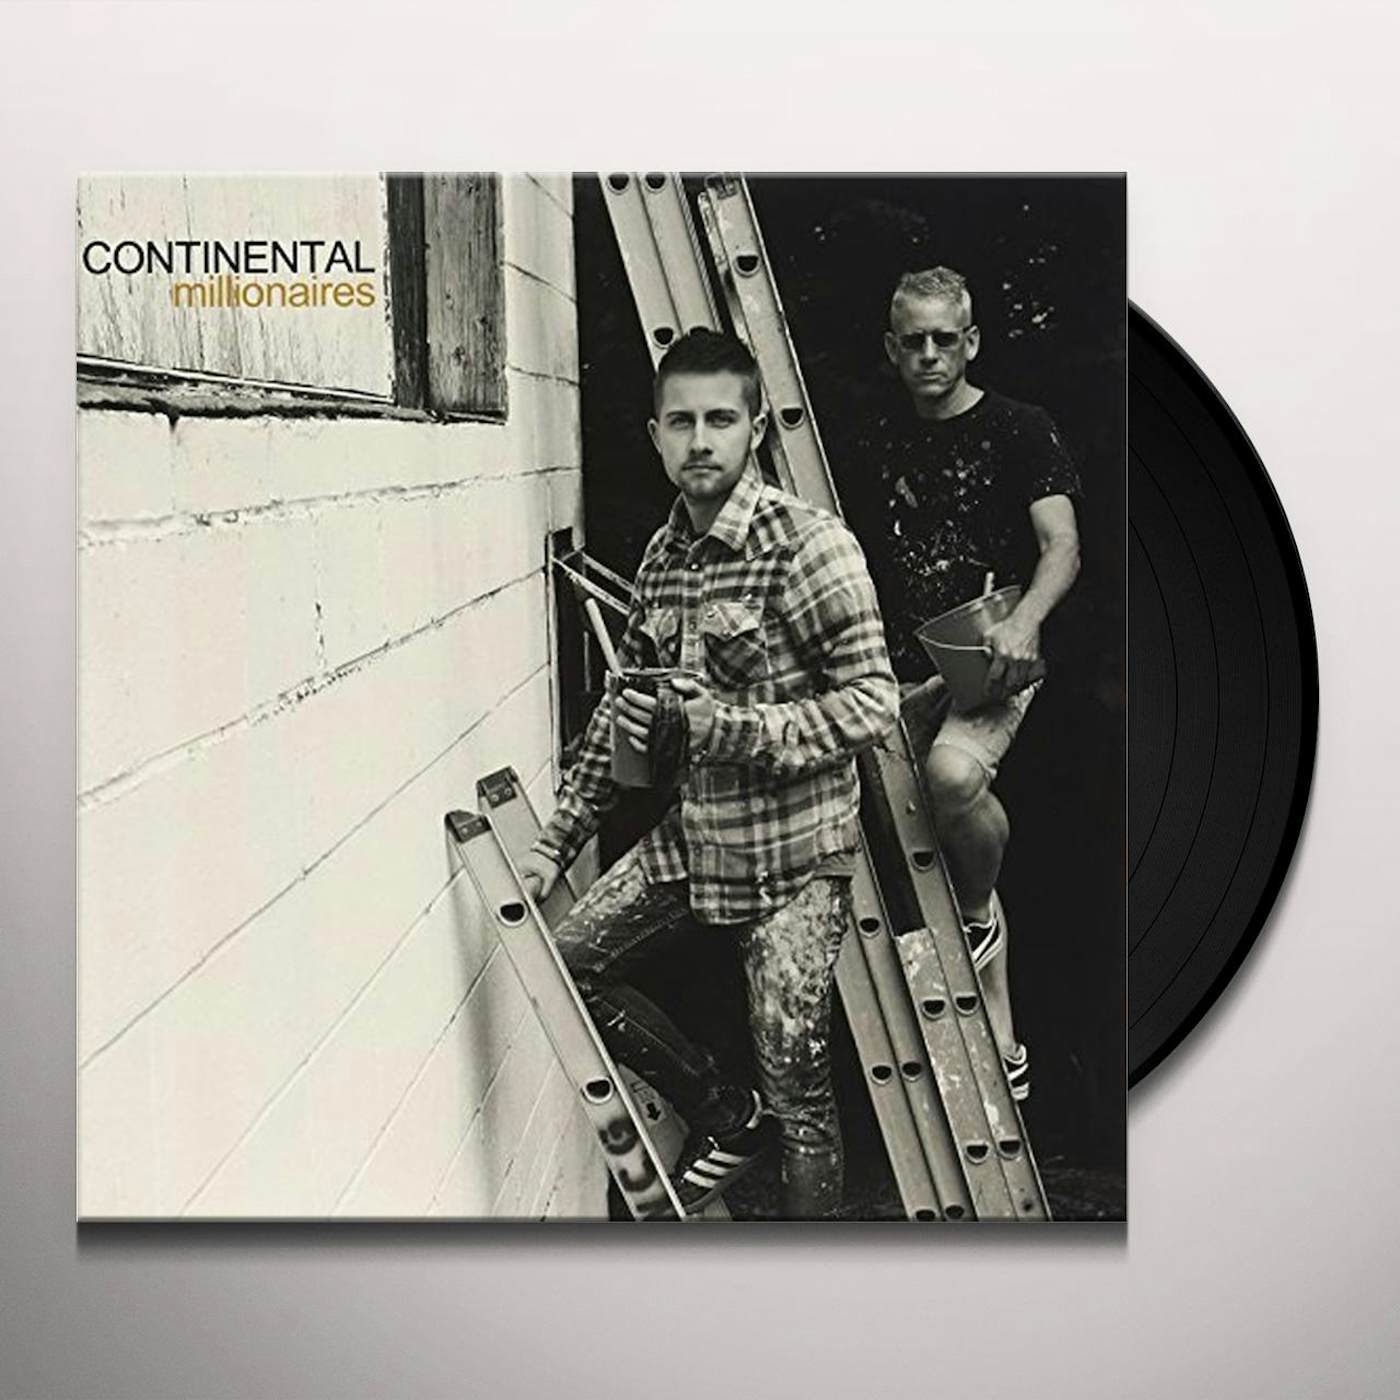 Continental Millionaires Vinyl Record